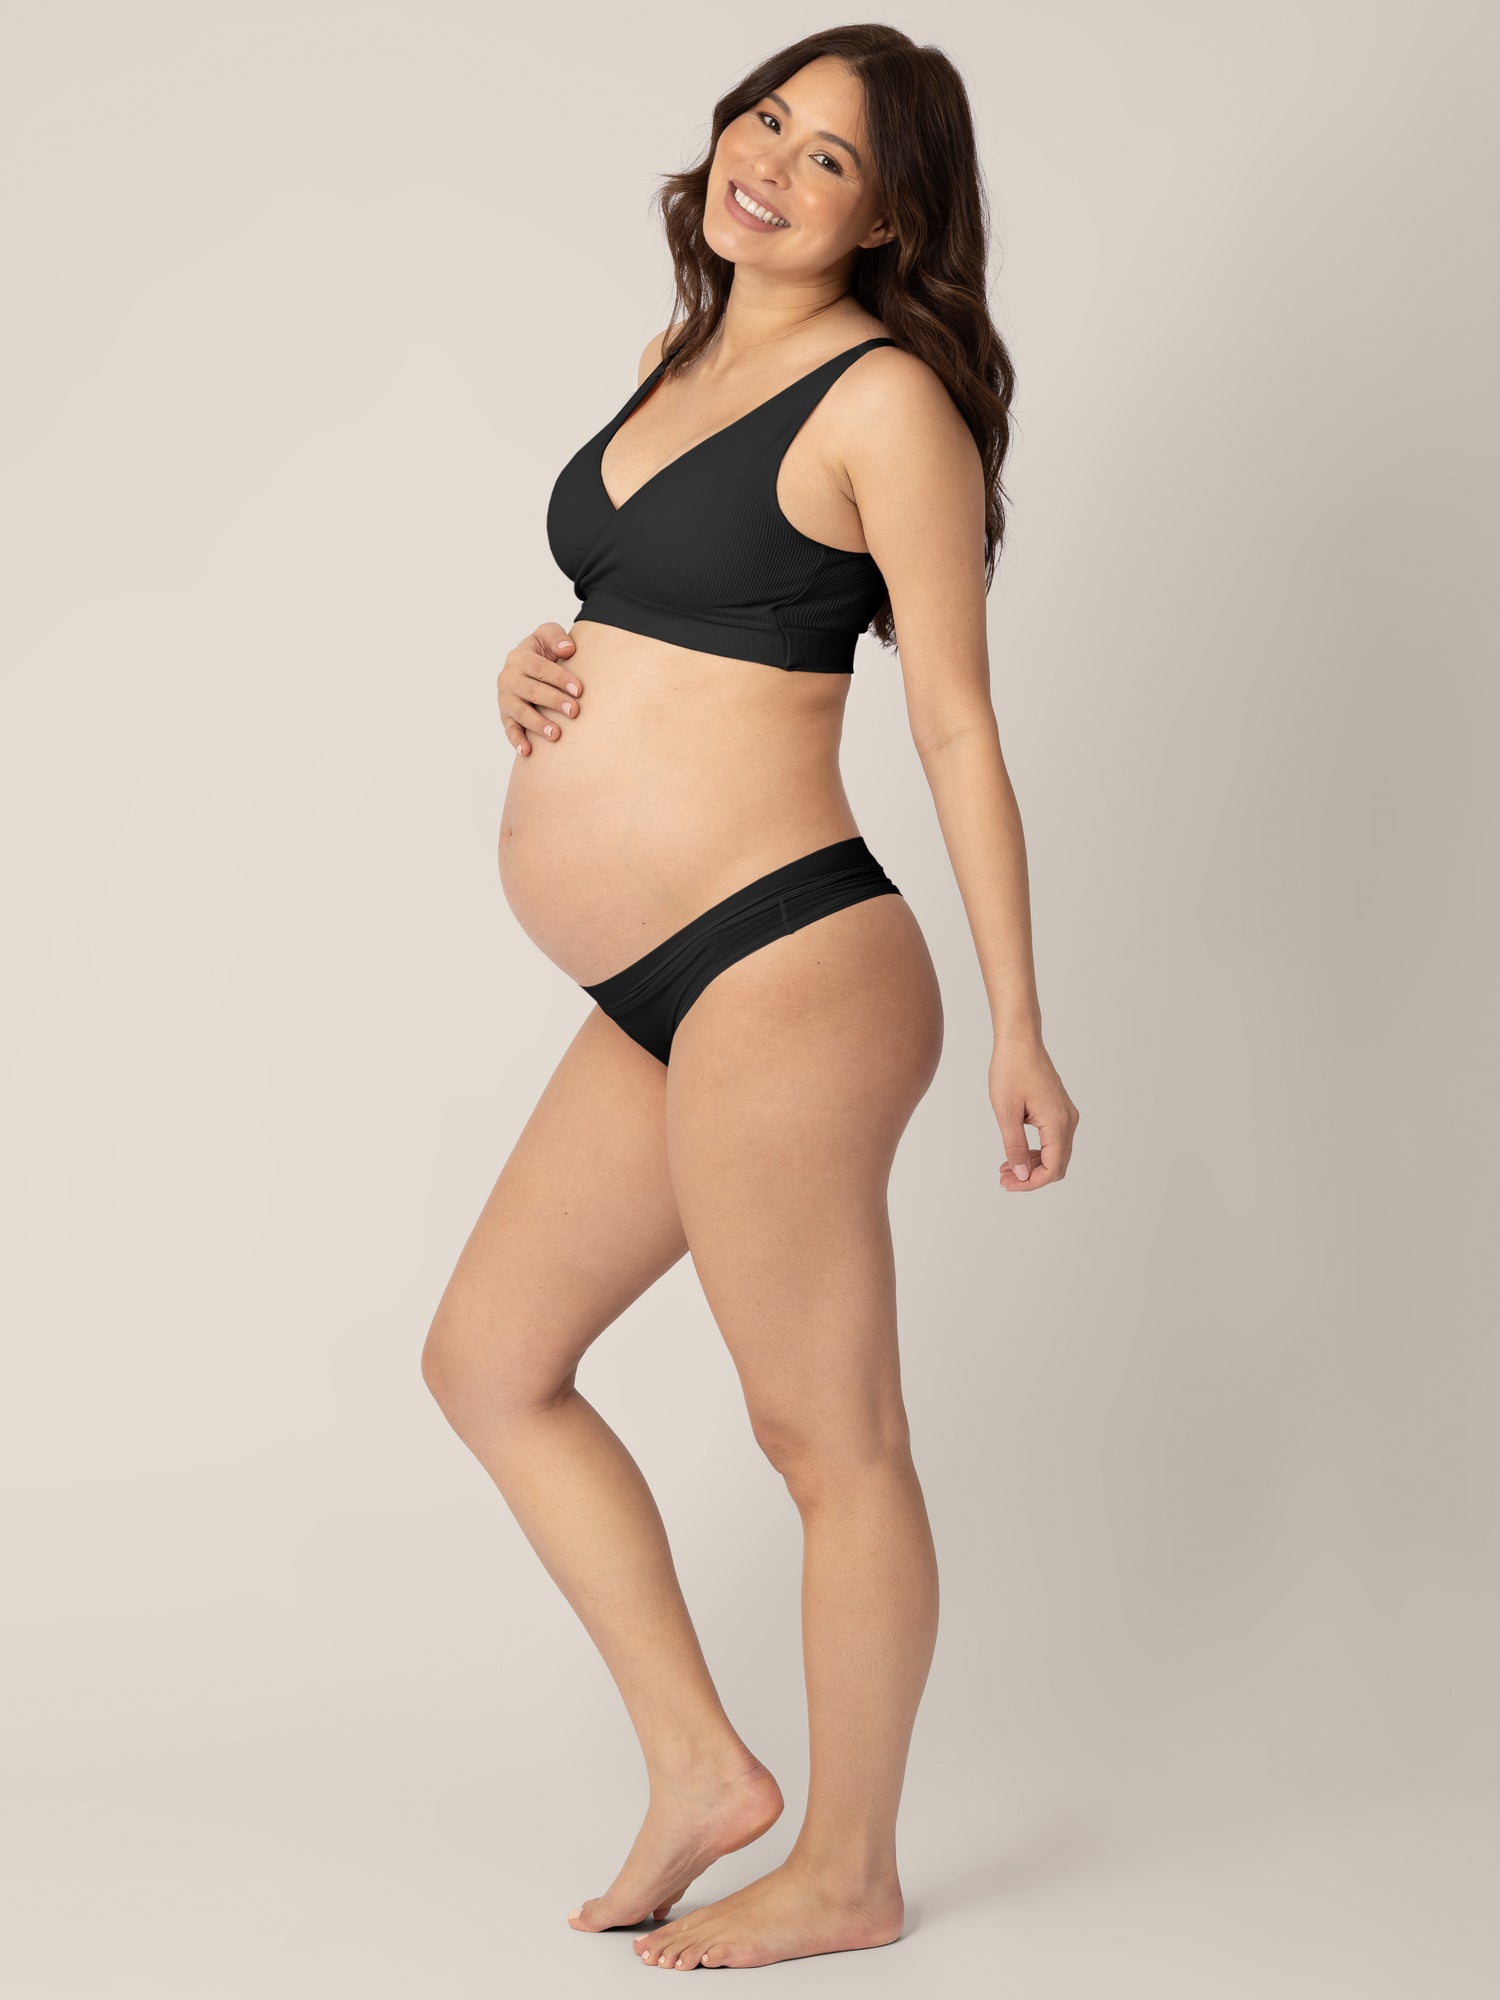 Amber Plum Maternity and Nursing Bra - FINAL SALE